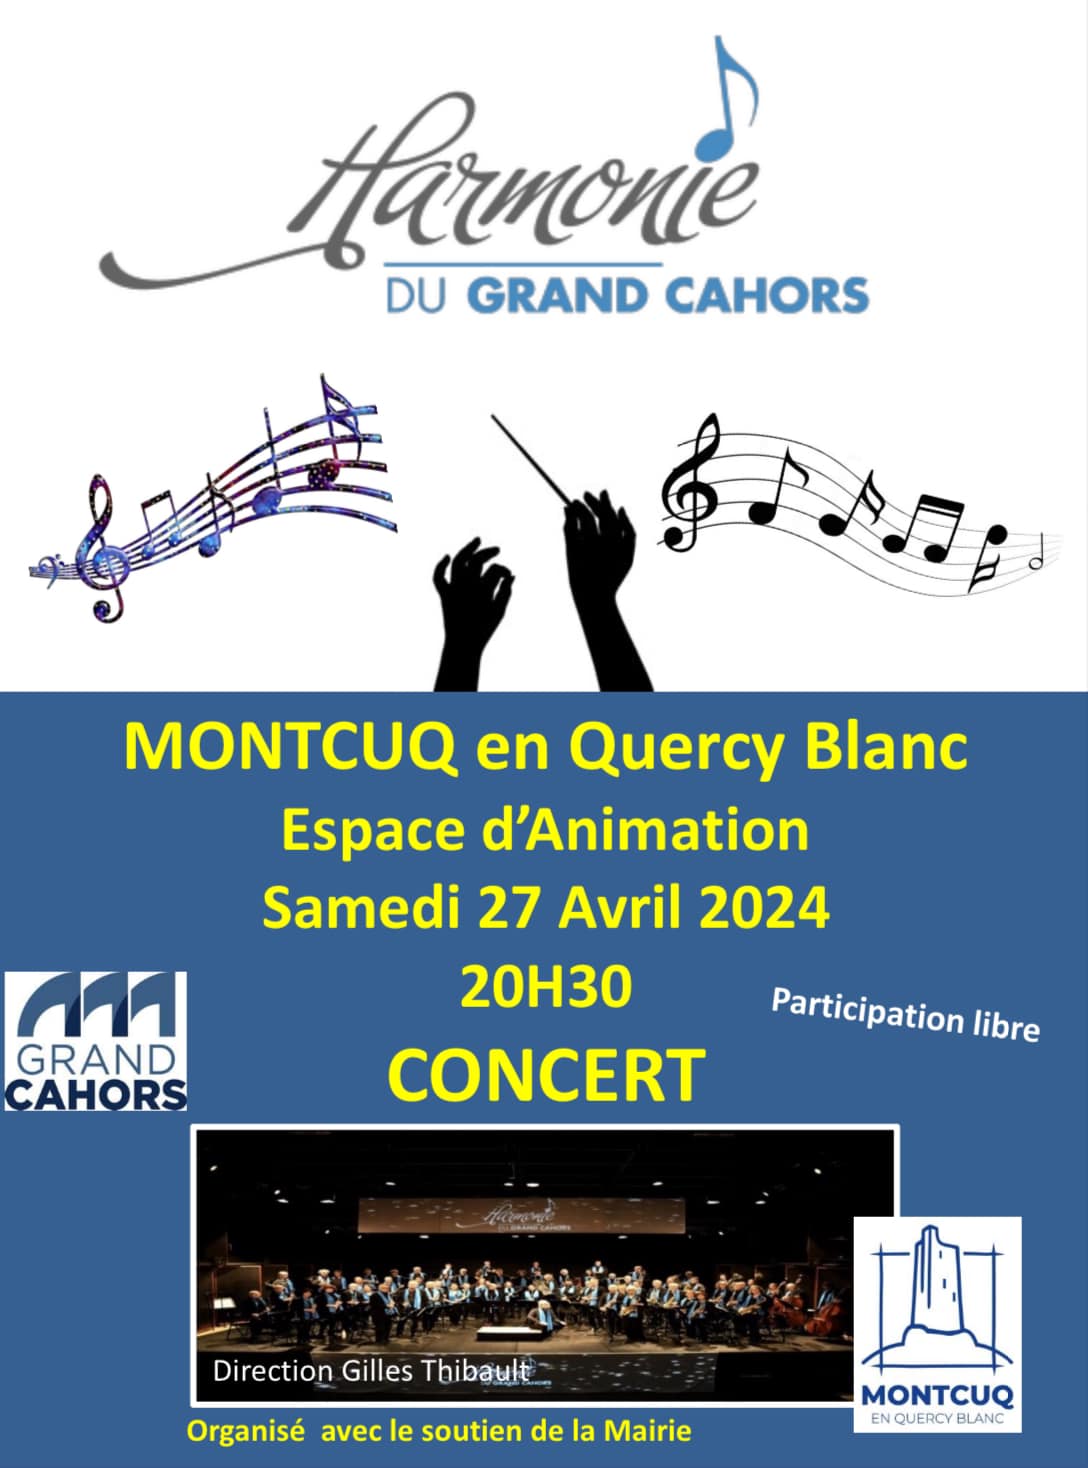 Concert à Montcuq: Harmonie du Grand Cahors null France null null null null